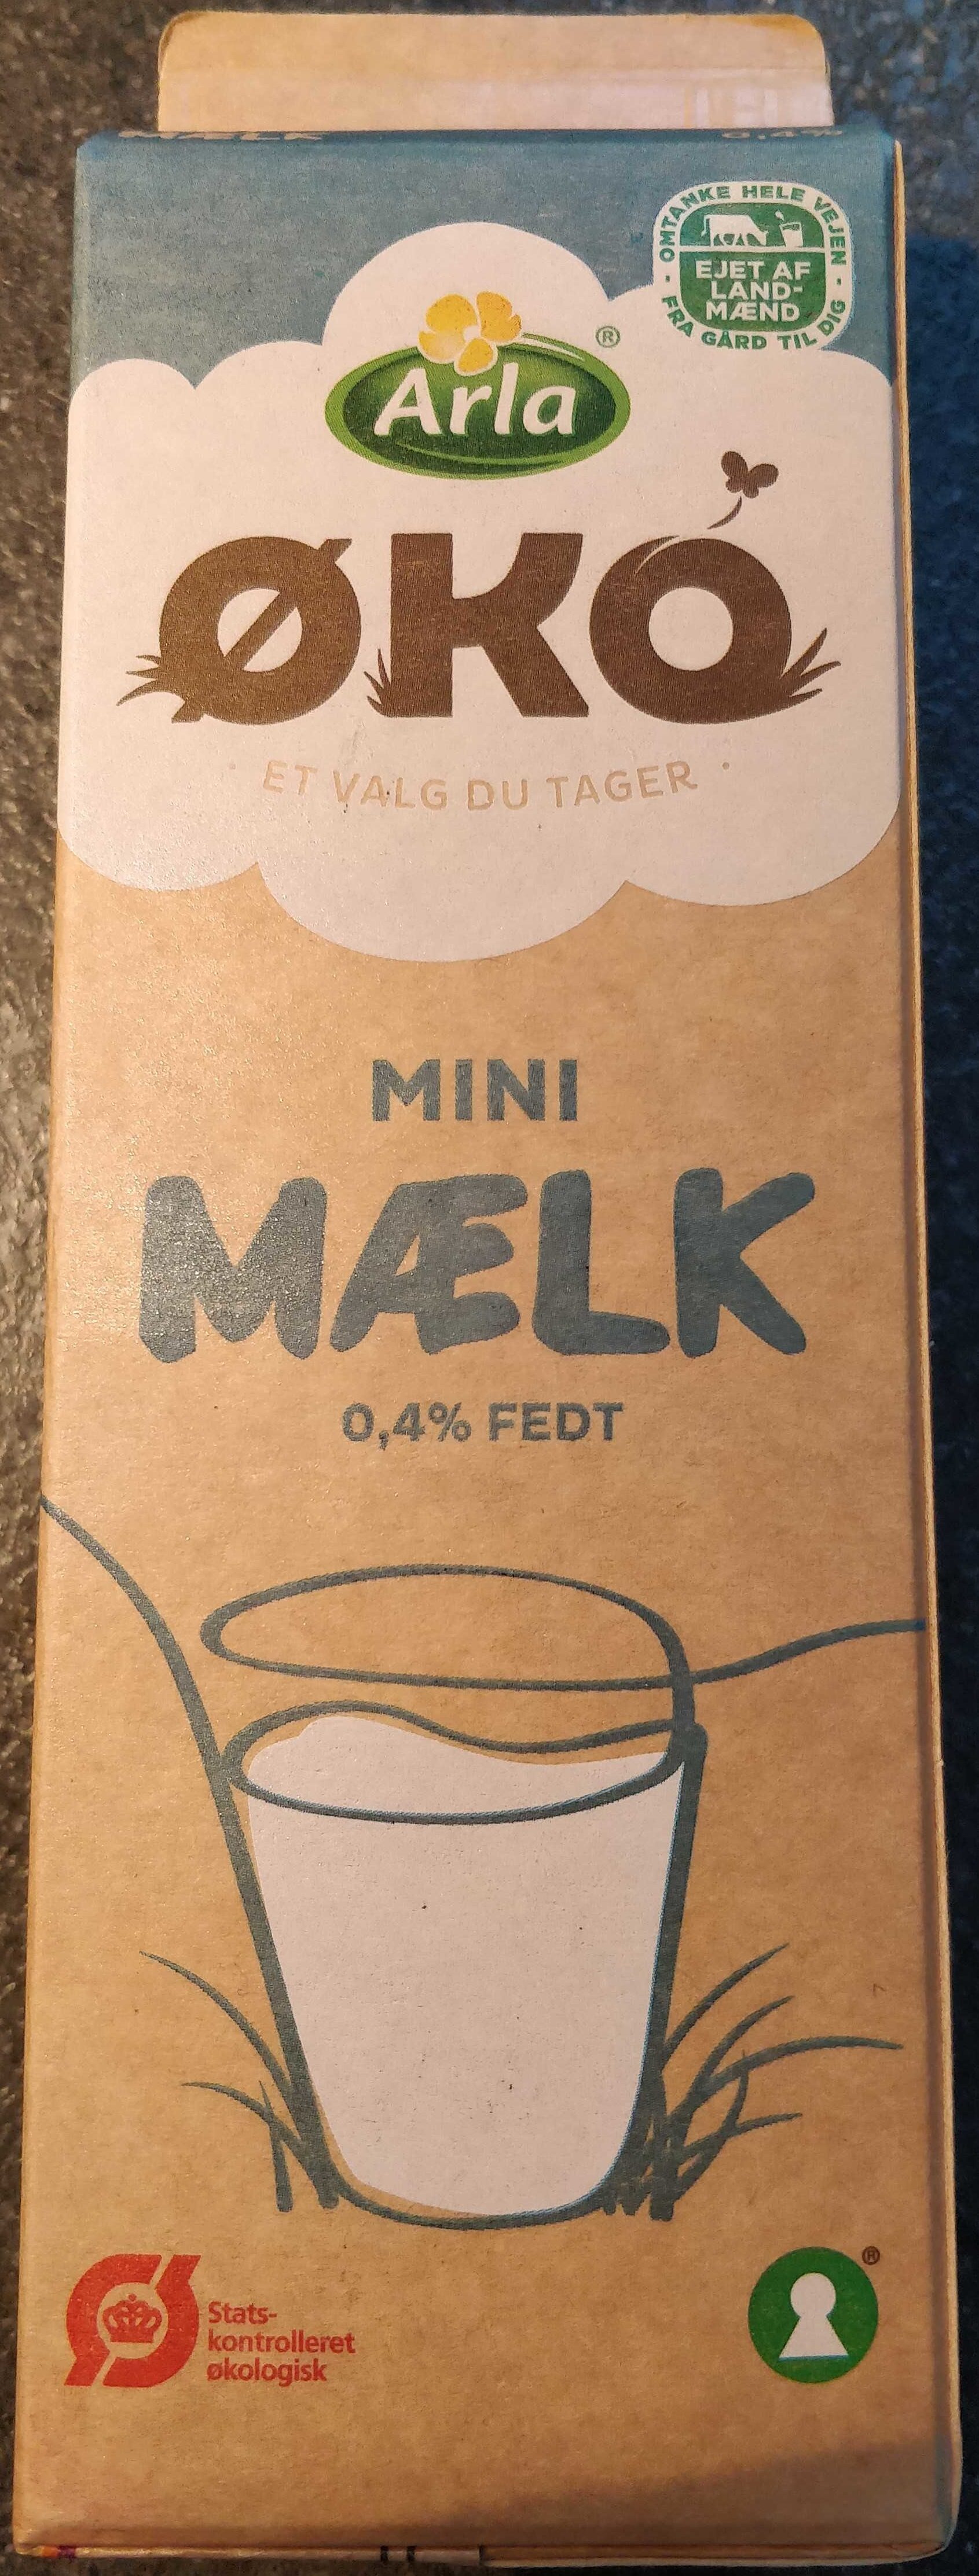 Øko Mini Mælk - Produkt - en